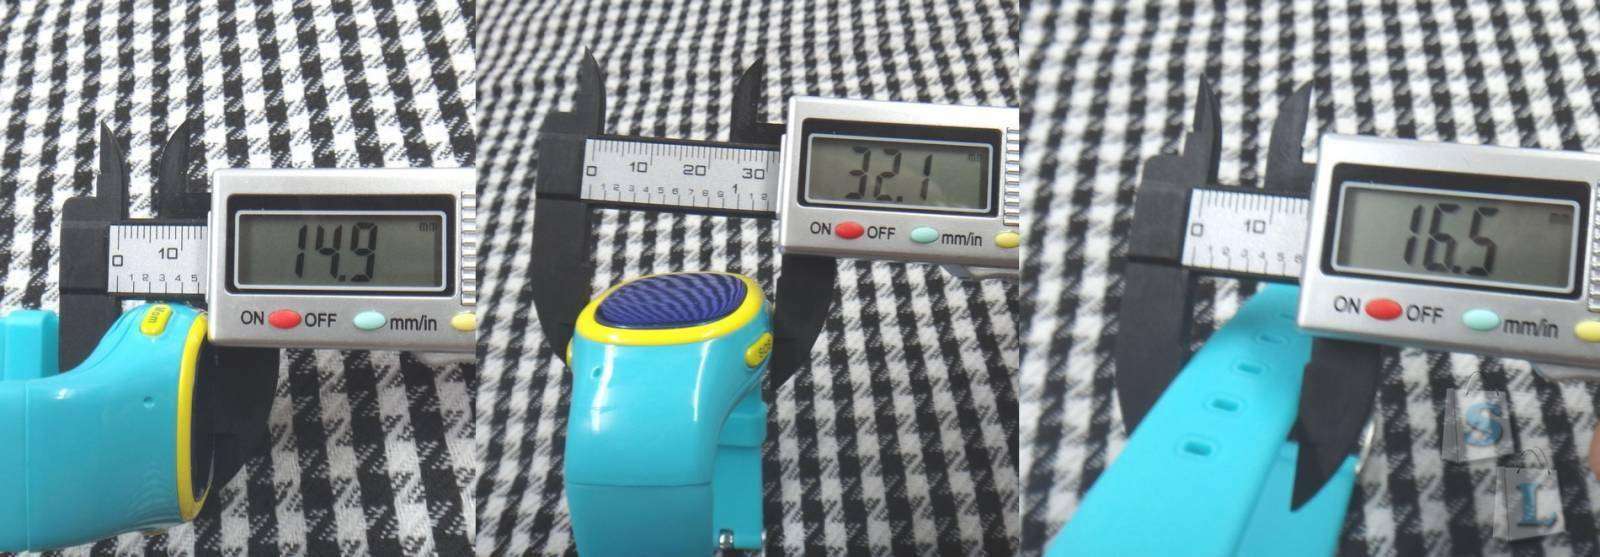 EachBuyer: Детские часы GPS трекер Cityeasy 520 с функцией телефона